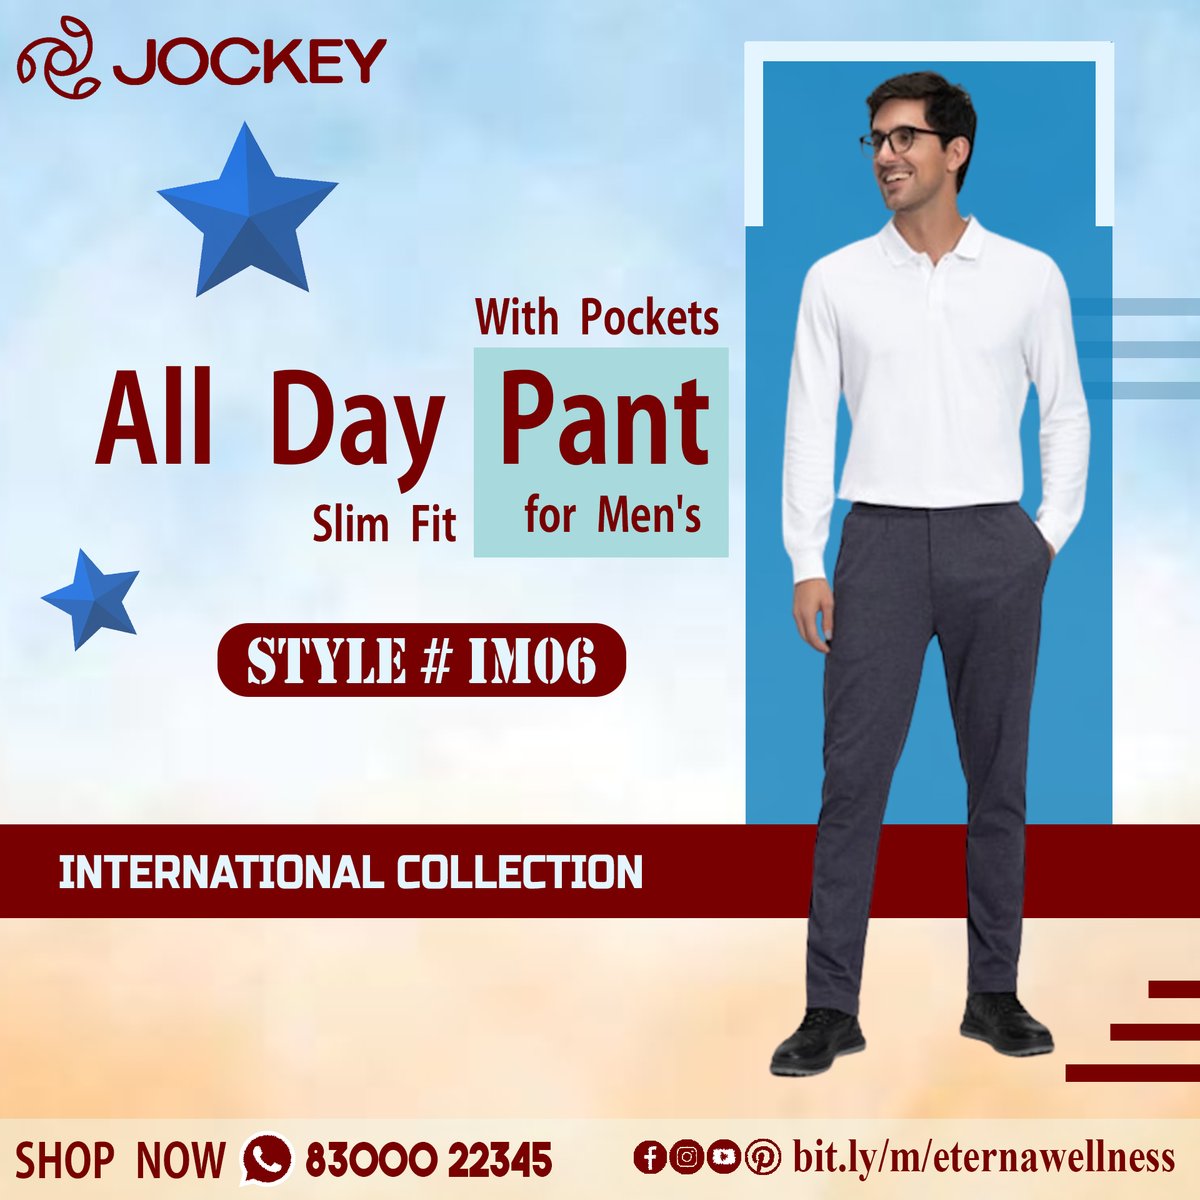 All Day Pant for Mens. Shop Now : bit.ly/m/eternawellne…

#jockeyformens
#jockeyalldaypants
#officialpant
#mensfashion
#menscollection
#eternawellnesspudurmadurai
#shopping